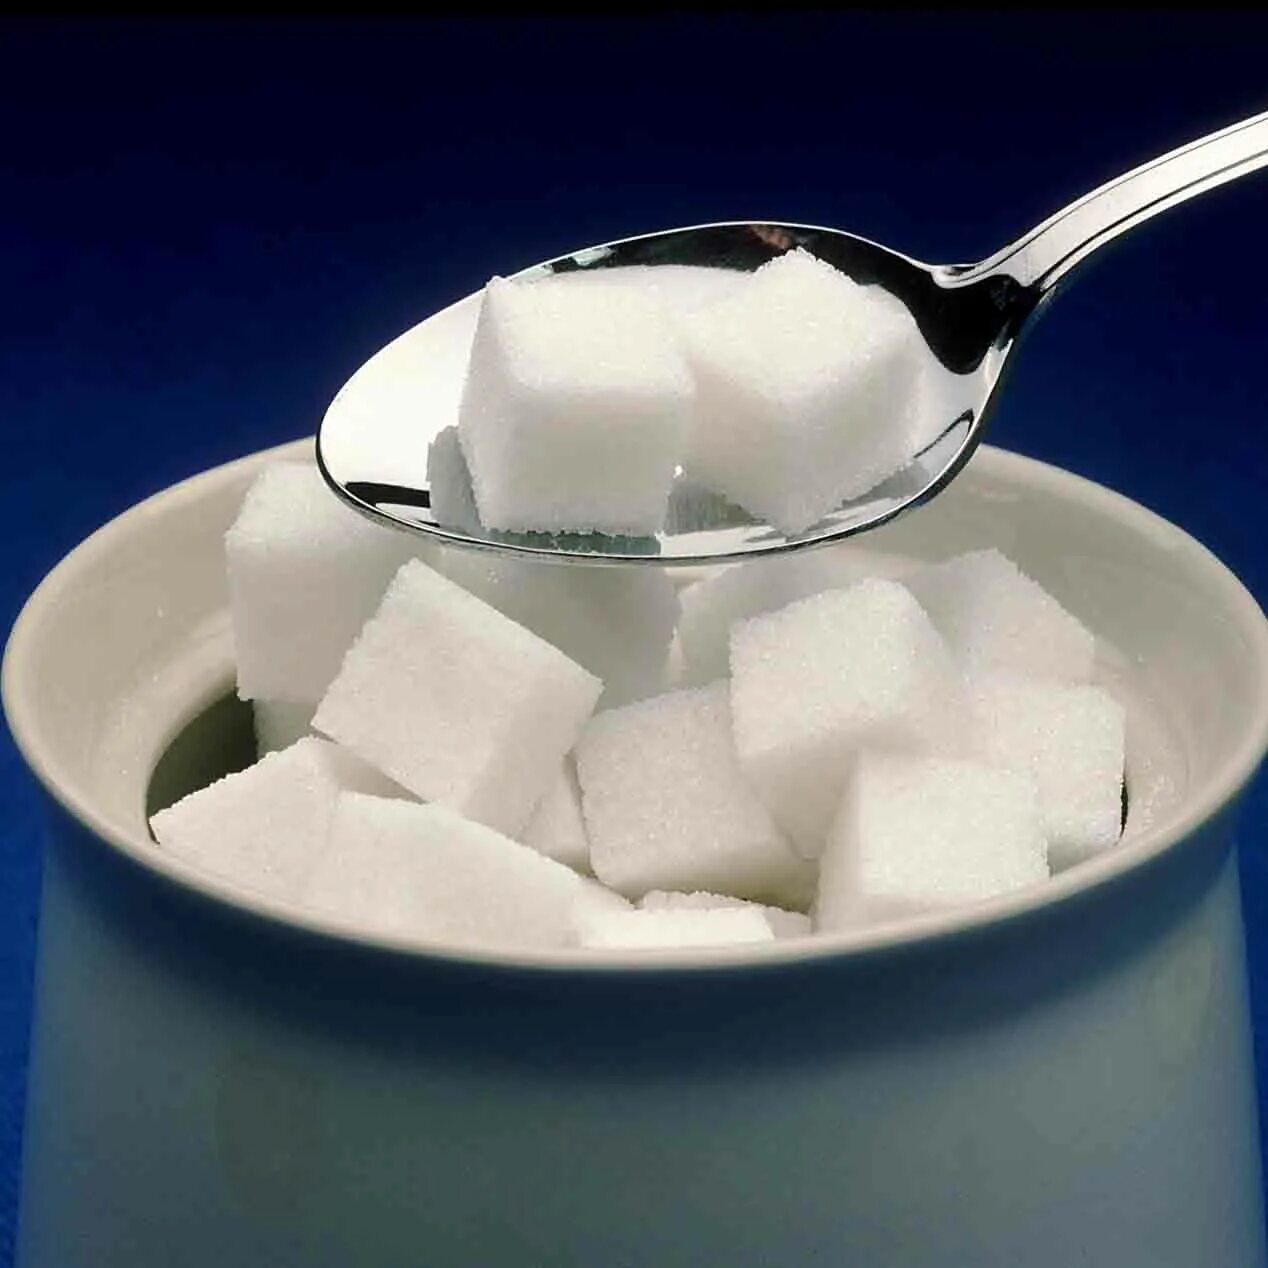 Сахар. Сахар рафинад. Сахарница для кускового сахара. Рафинированный сахар. Берг сахара